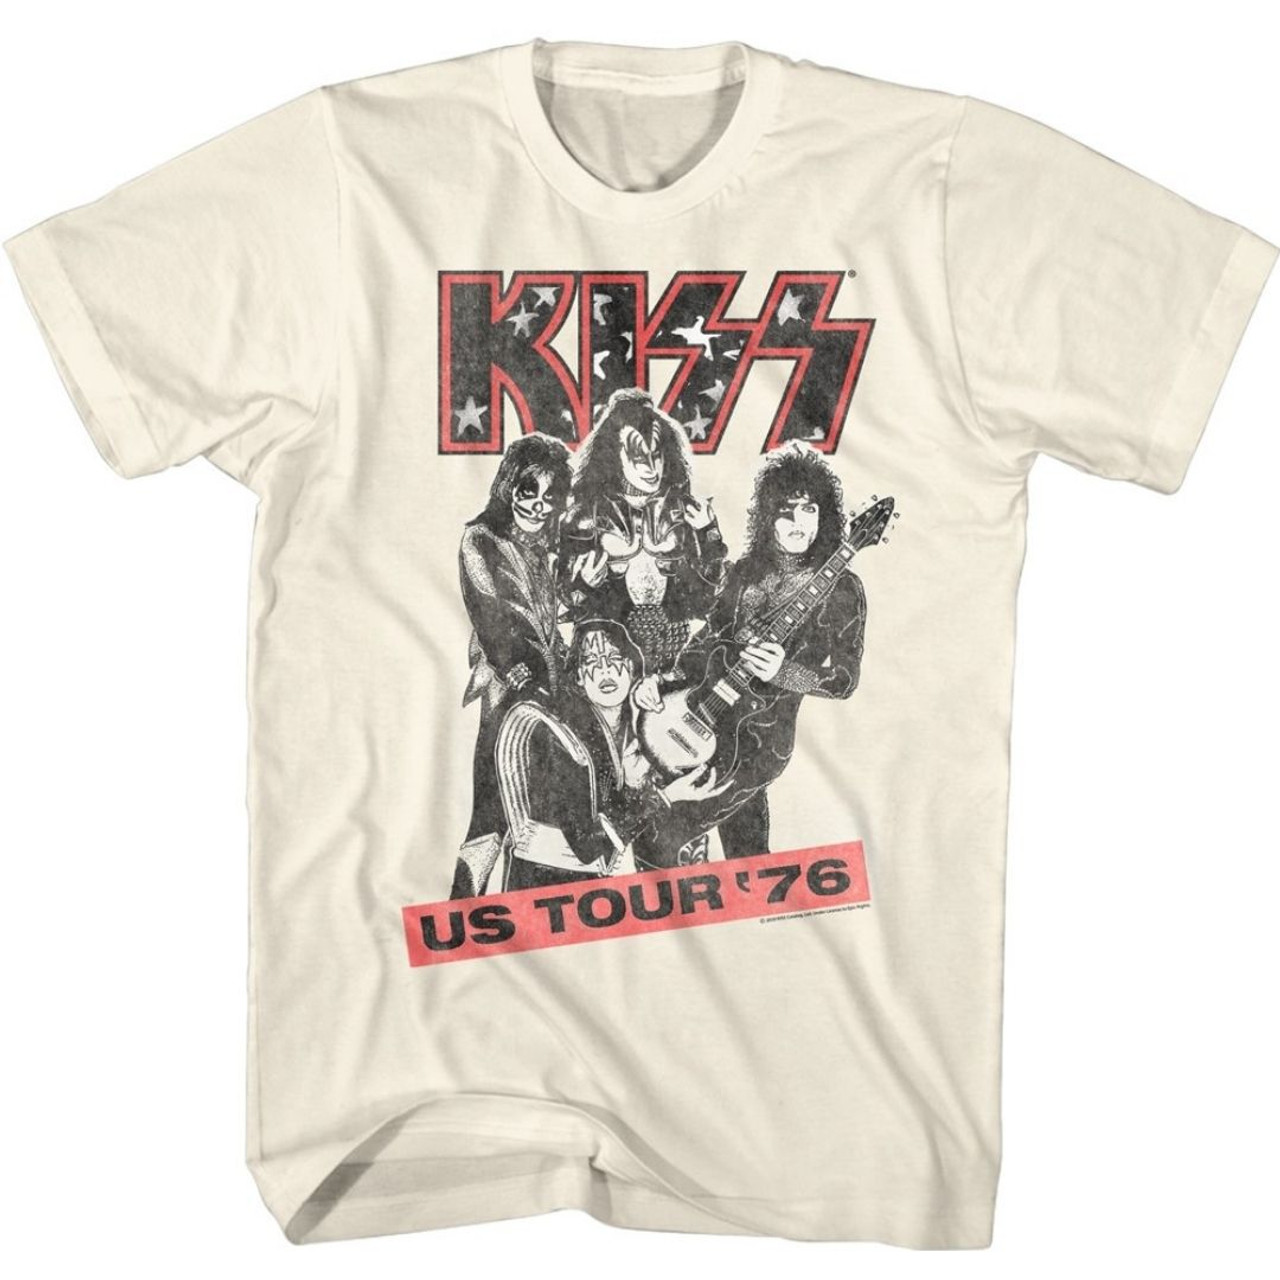 Vintage Rock T-Shirts, Band T Shirts, and Concert Shirts 